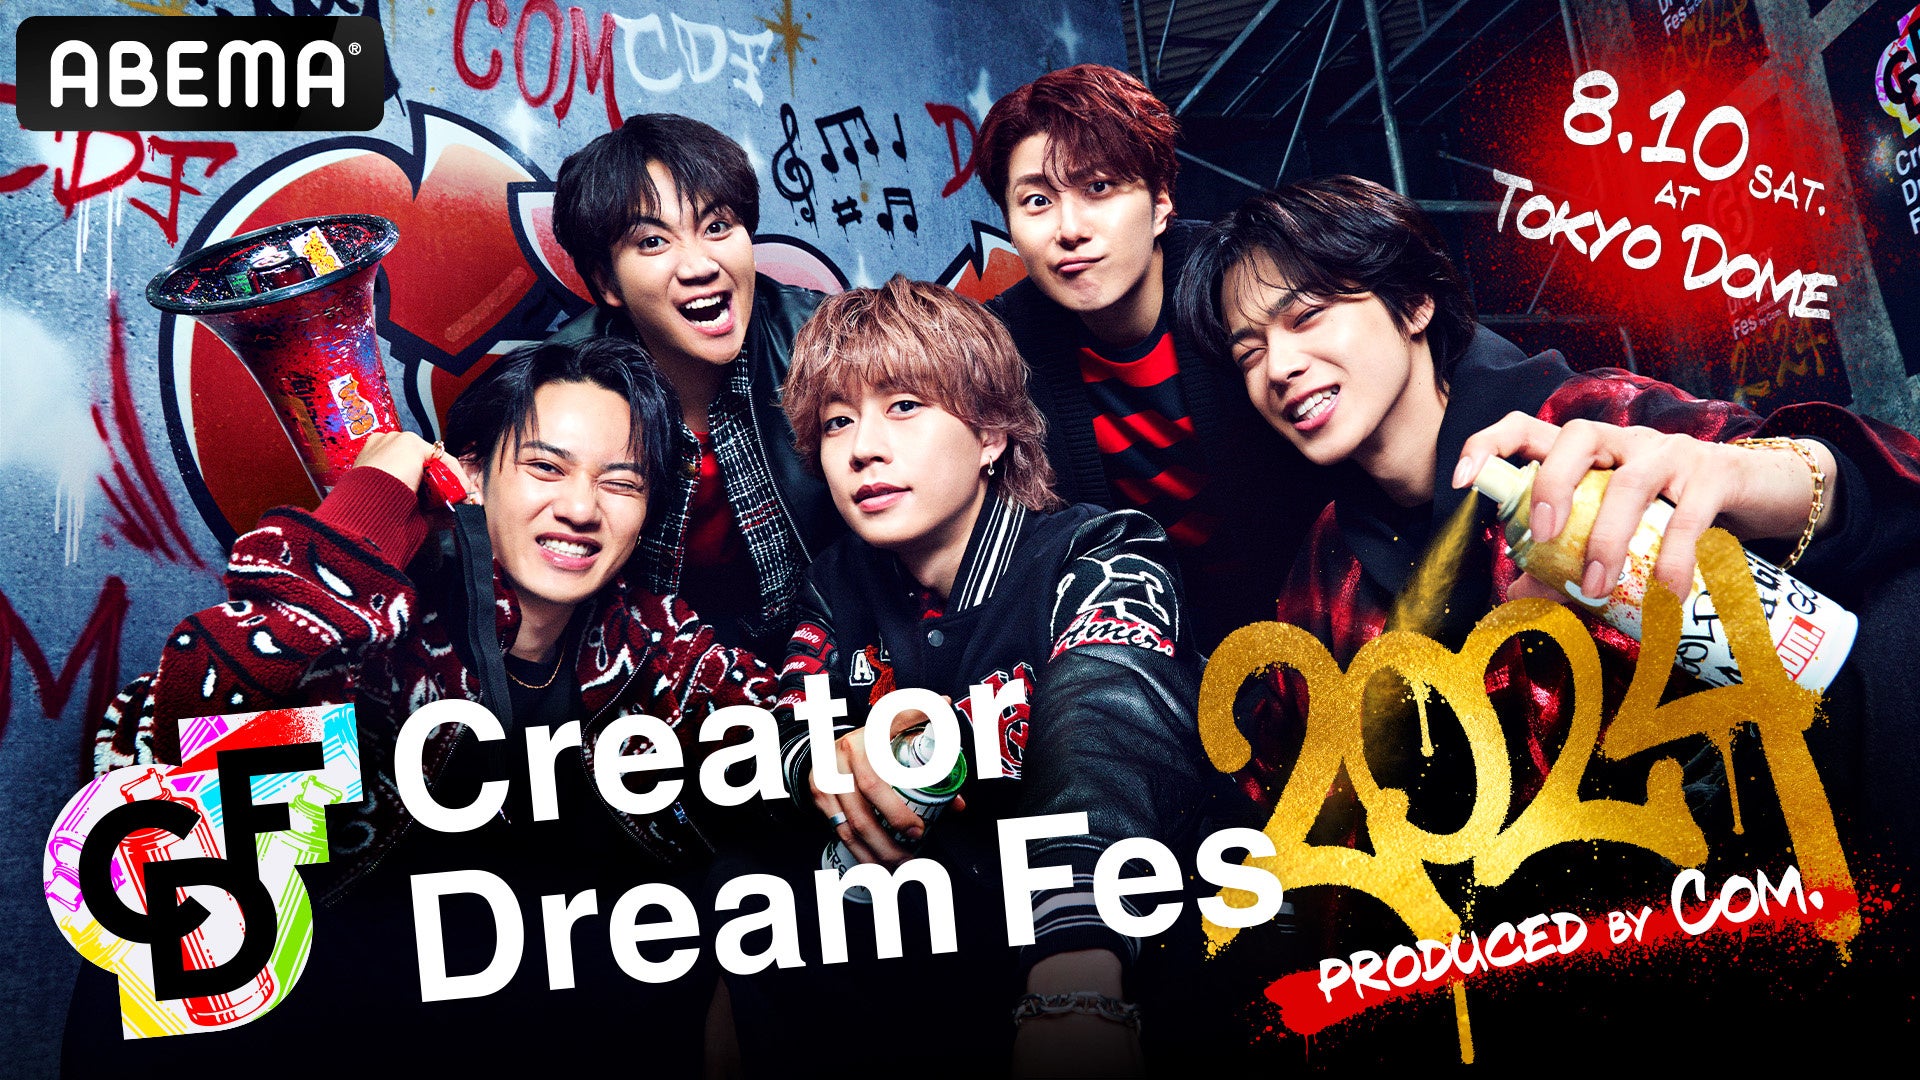 「ABEMA」が、コムドット総合プロデュースの東京ドームイベント『Creator Dream Fes 2024 ~produced by Com.~...